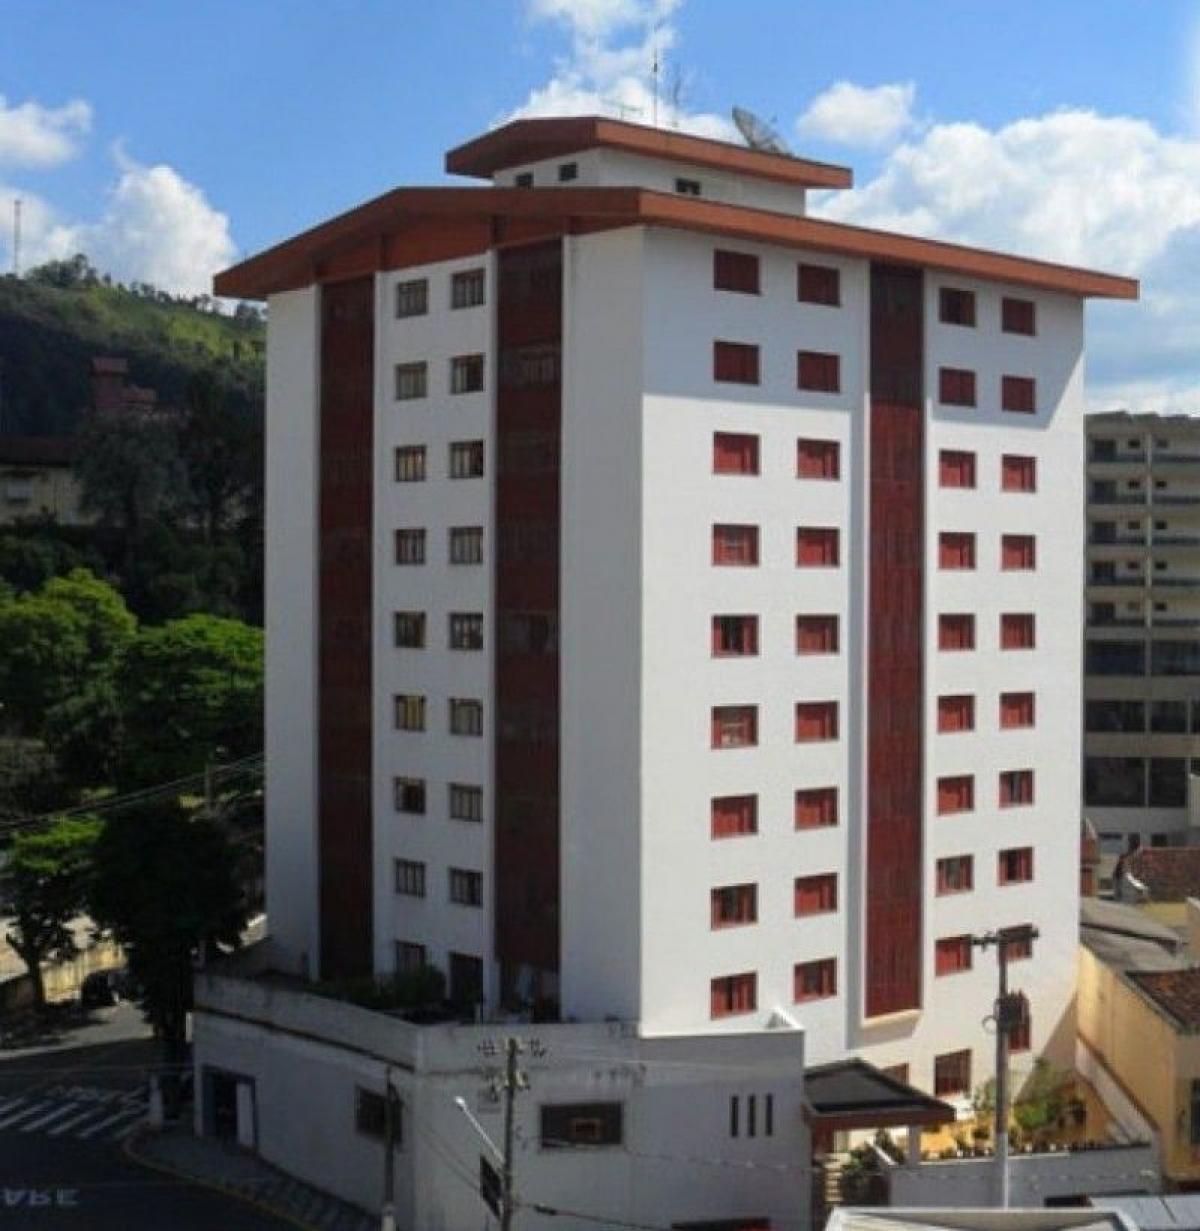 Picture of Apartment For Sale in Águas De Lindoia, Sao Paulo, Brazil